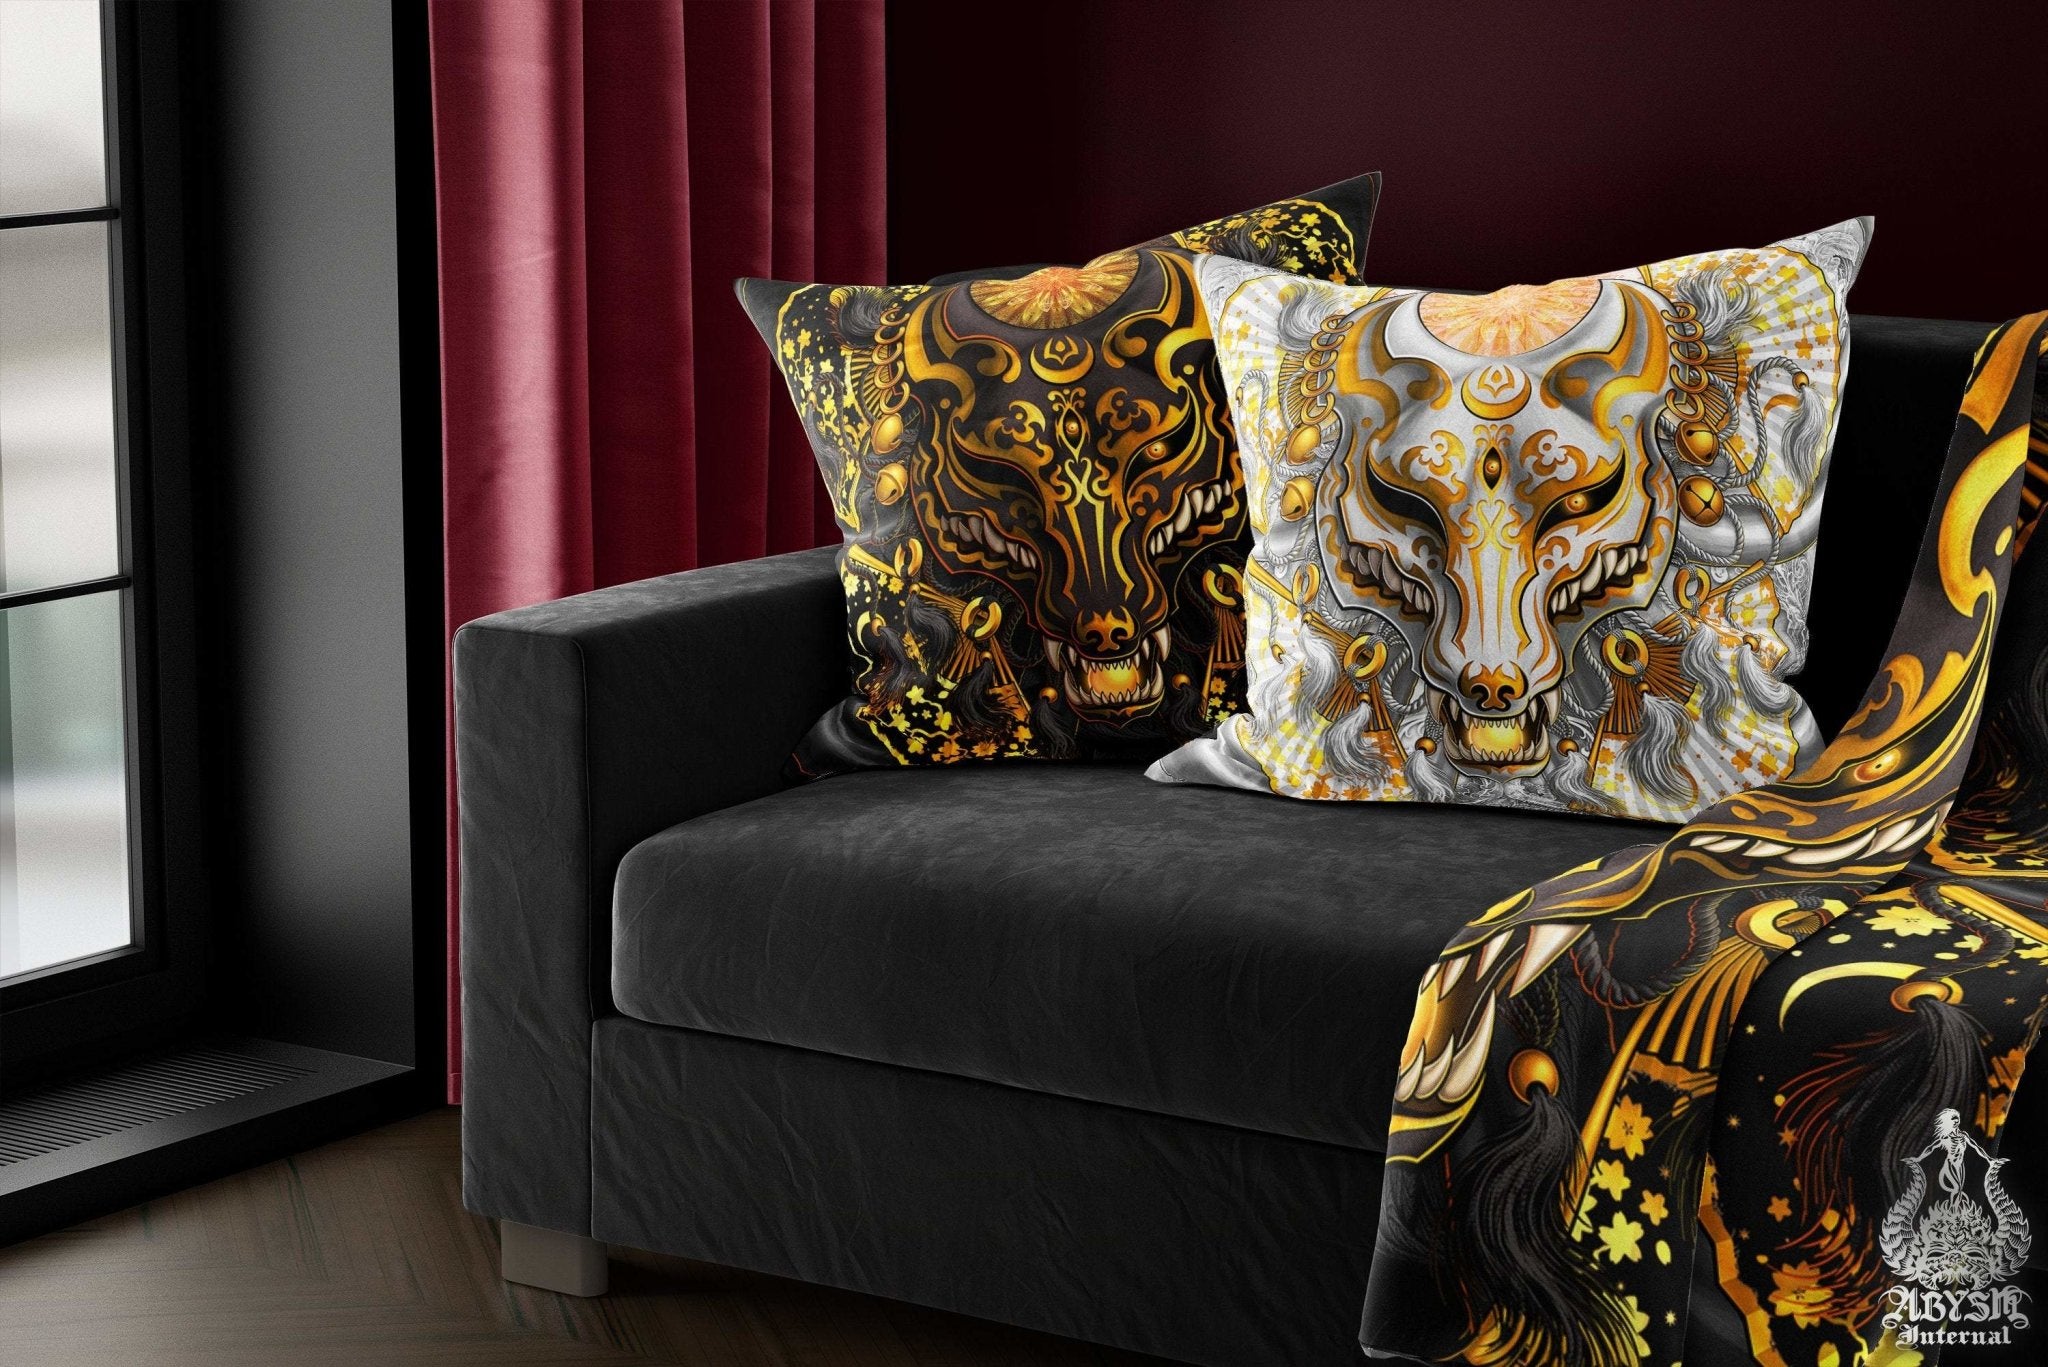 Kitsune Throw Pillow, Decorative Accent Cushion, Japanese Fox Mask, Okami, Anime and Gamer Room Decor, Alternative Home - Black & Gold - Abysm Internal